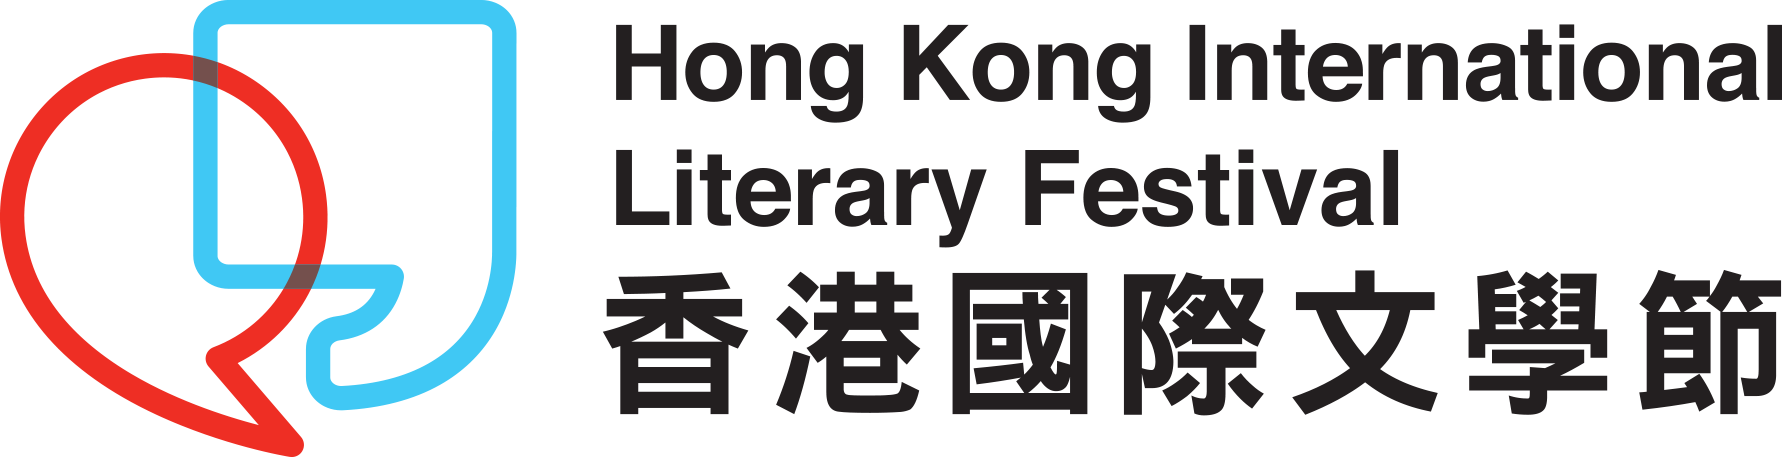 Hong Kong International Literary Festival logo